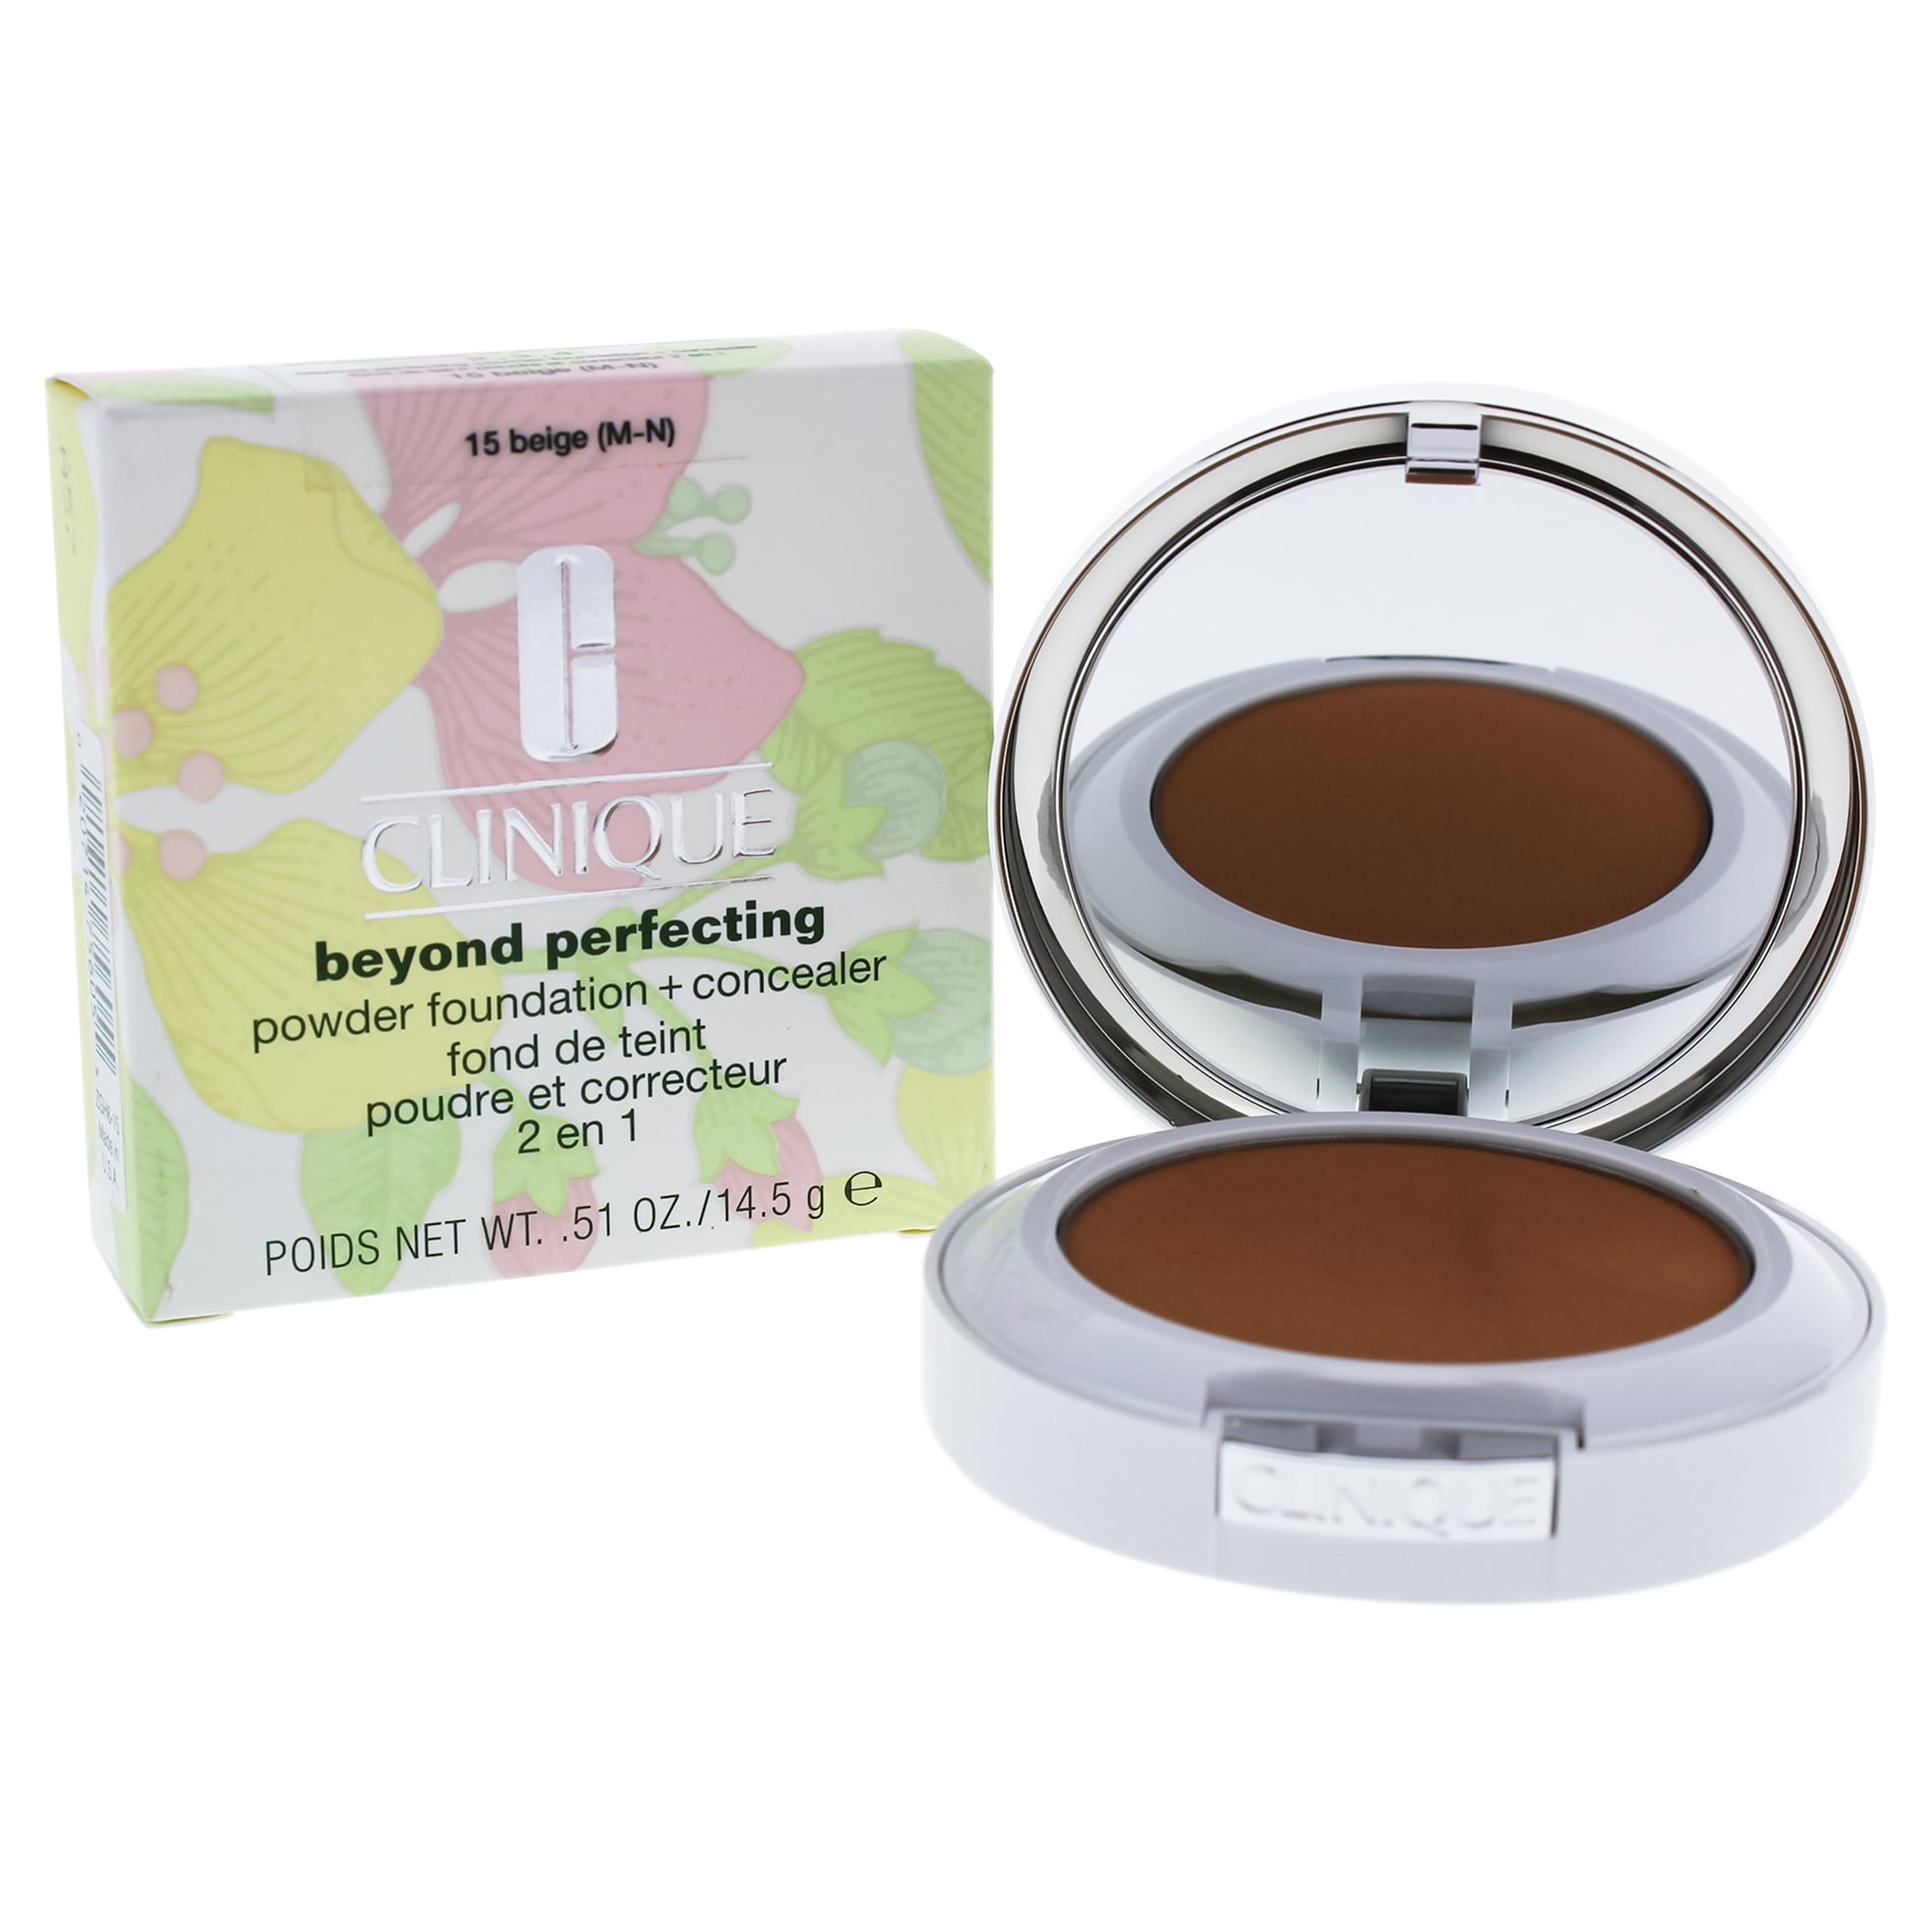 Beyond Perfecting Powder Foundation+Concealer # 15 (M-N) by for Women - 0.51 oz Found Walmart.com